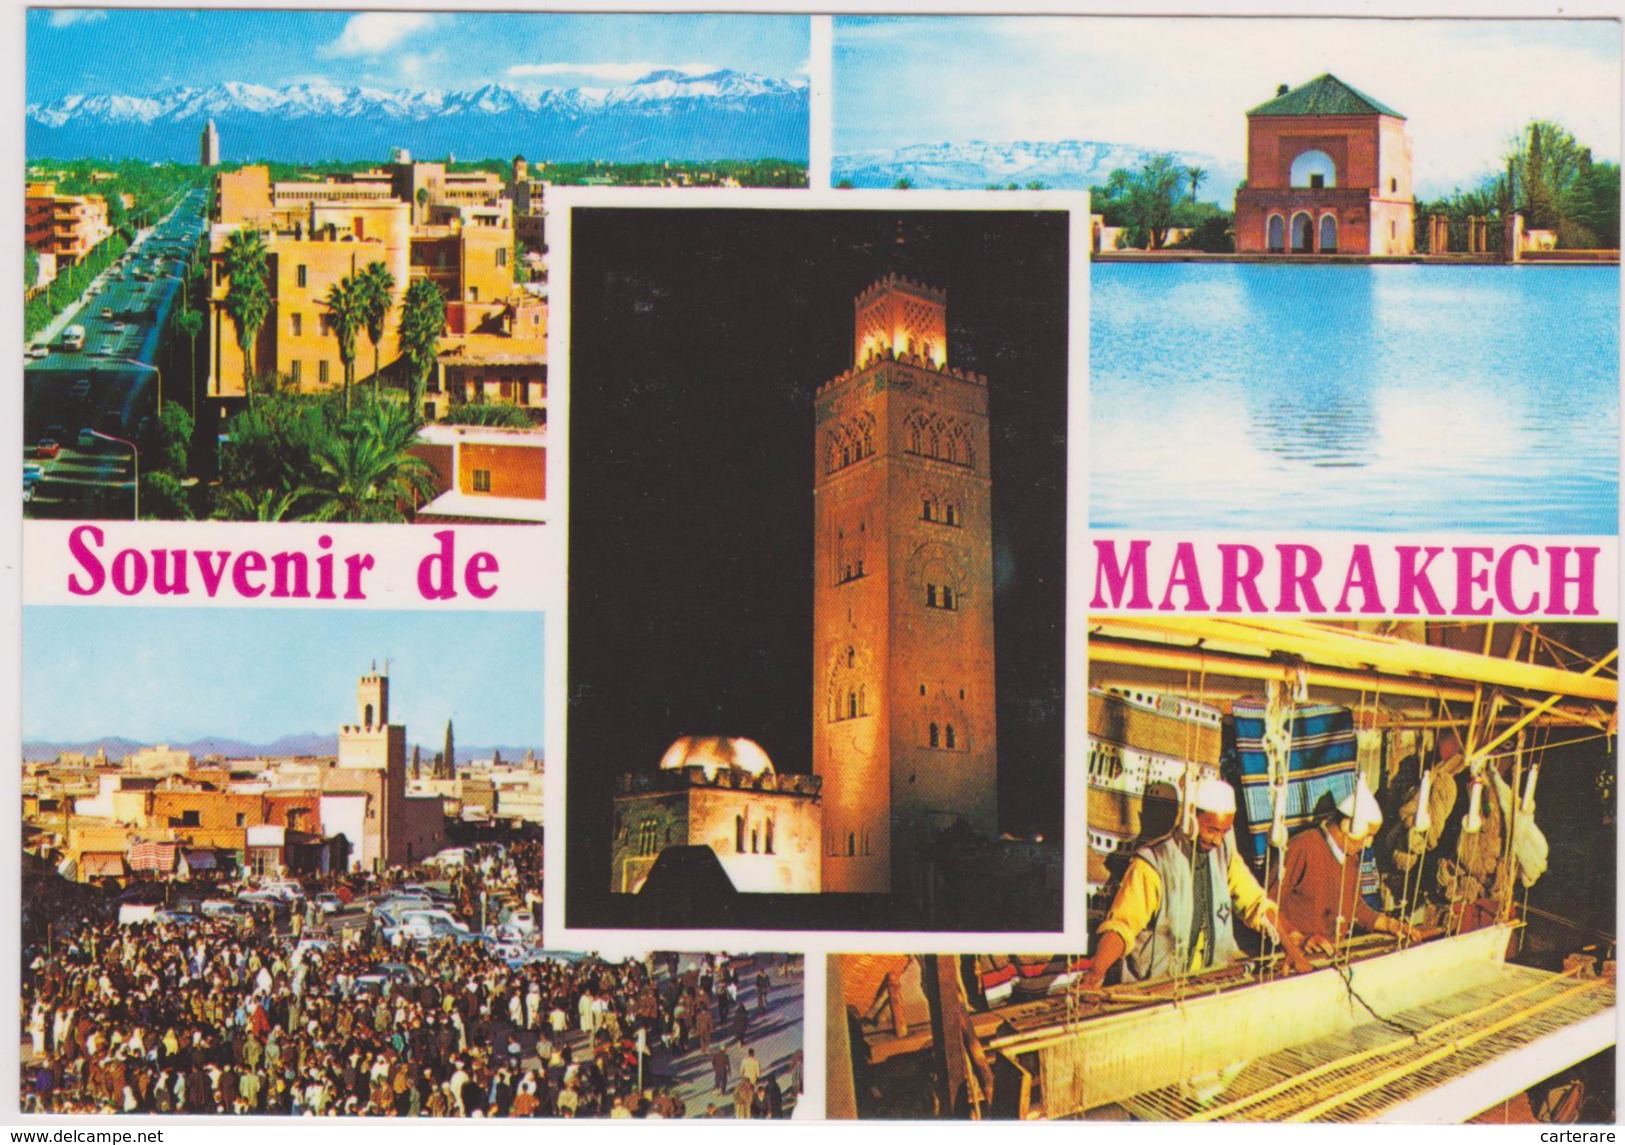 AFRIQUE,AFRICA,MAROC,MOROCCO,MARRAKECH,MURRAKUSH,TISSEUR, - Marrakech